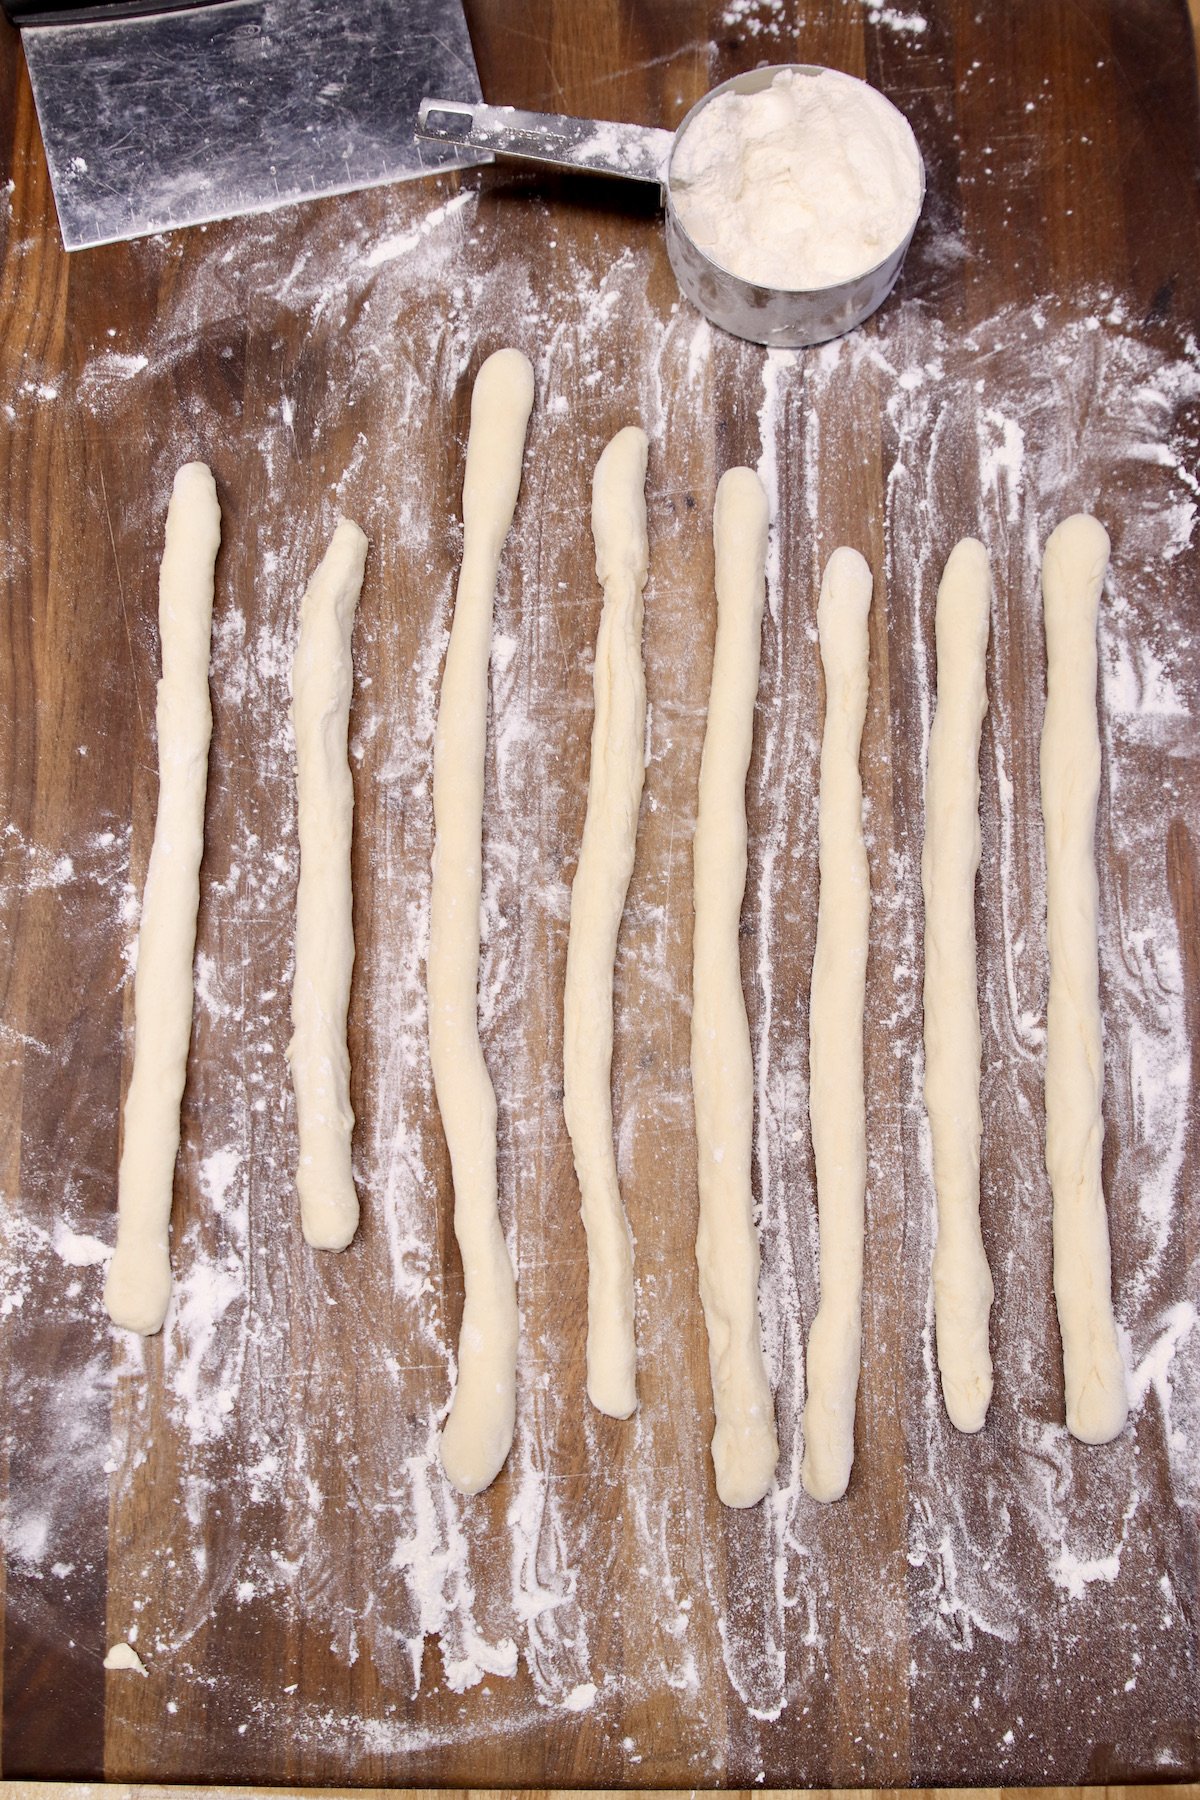 8 dough pieces - shaping for pretzels